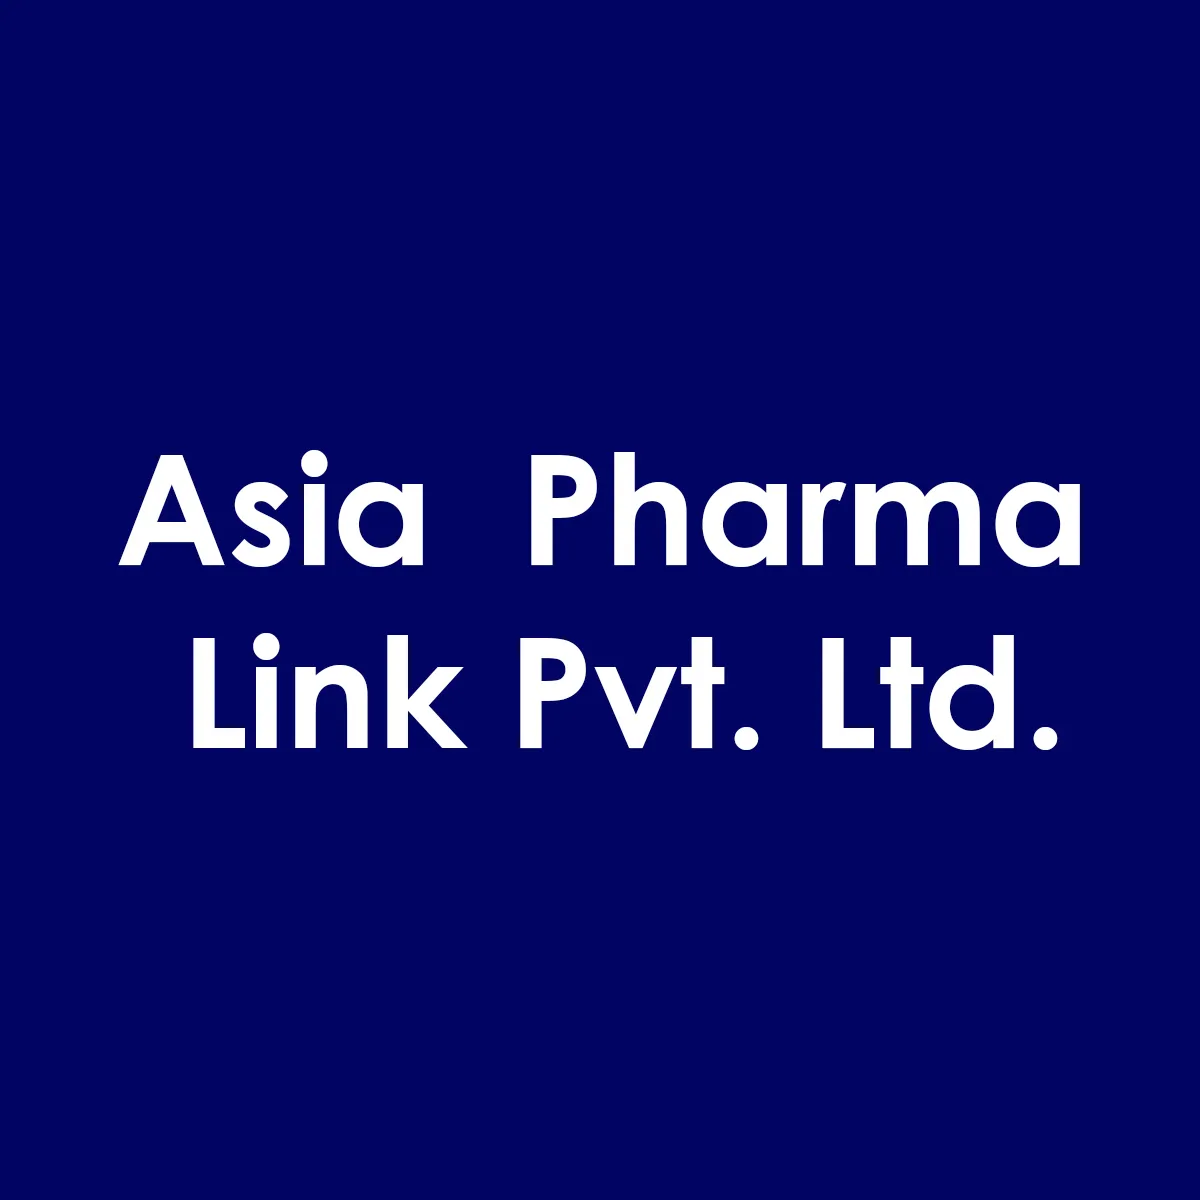 Asia Pharma Link Pvt. Ltd.